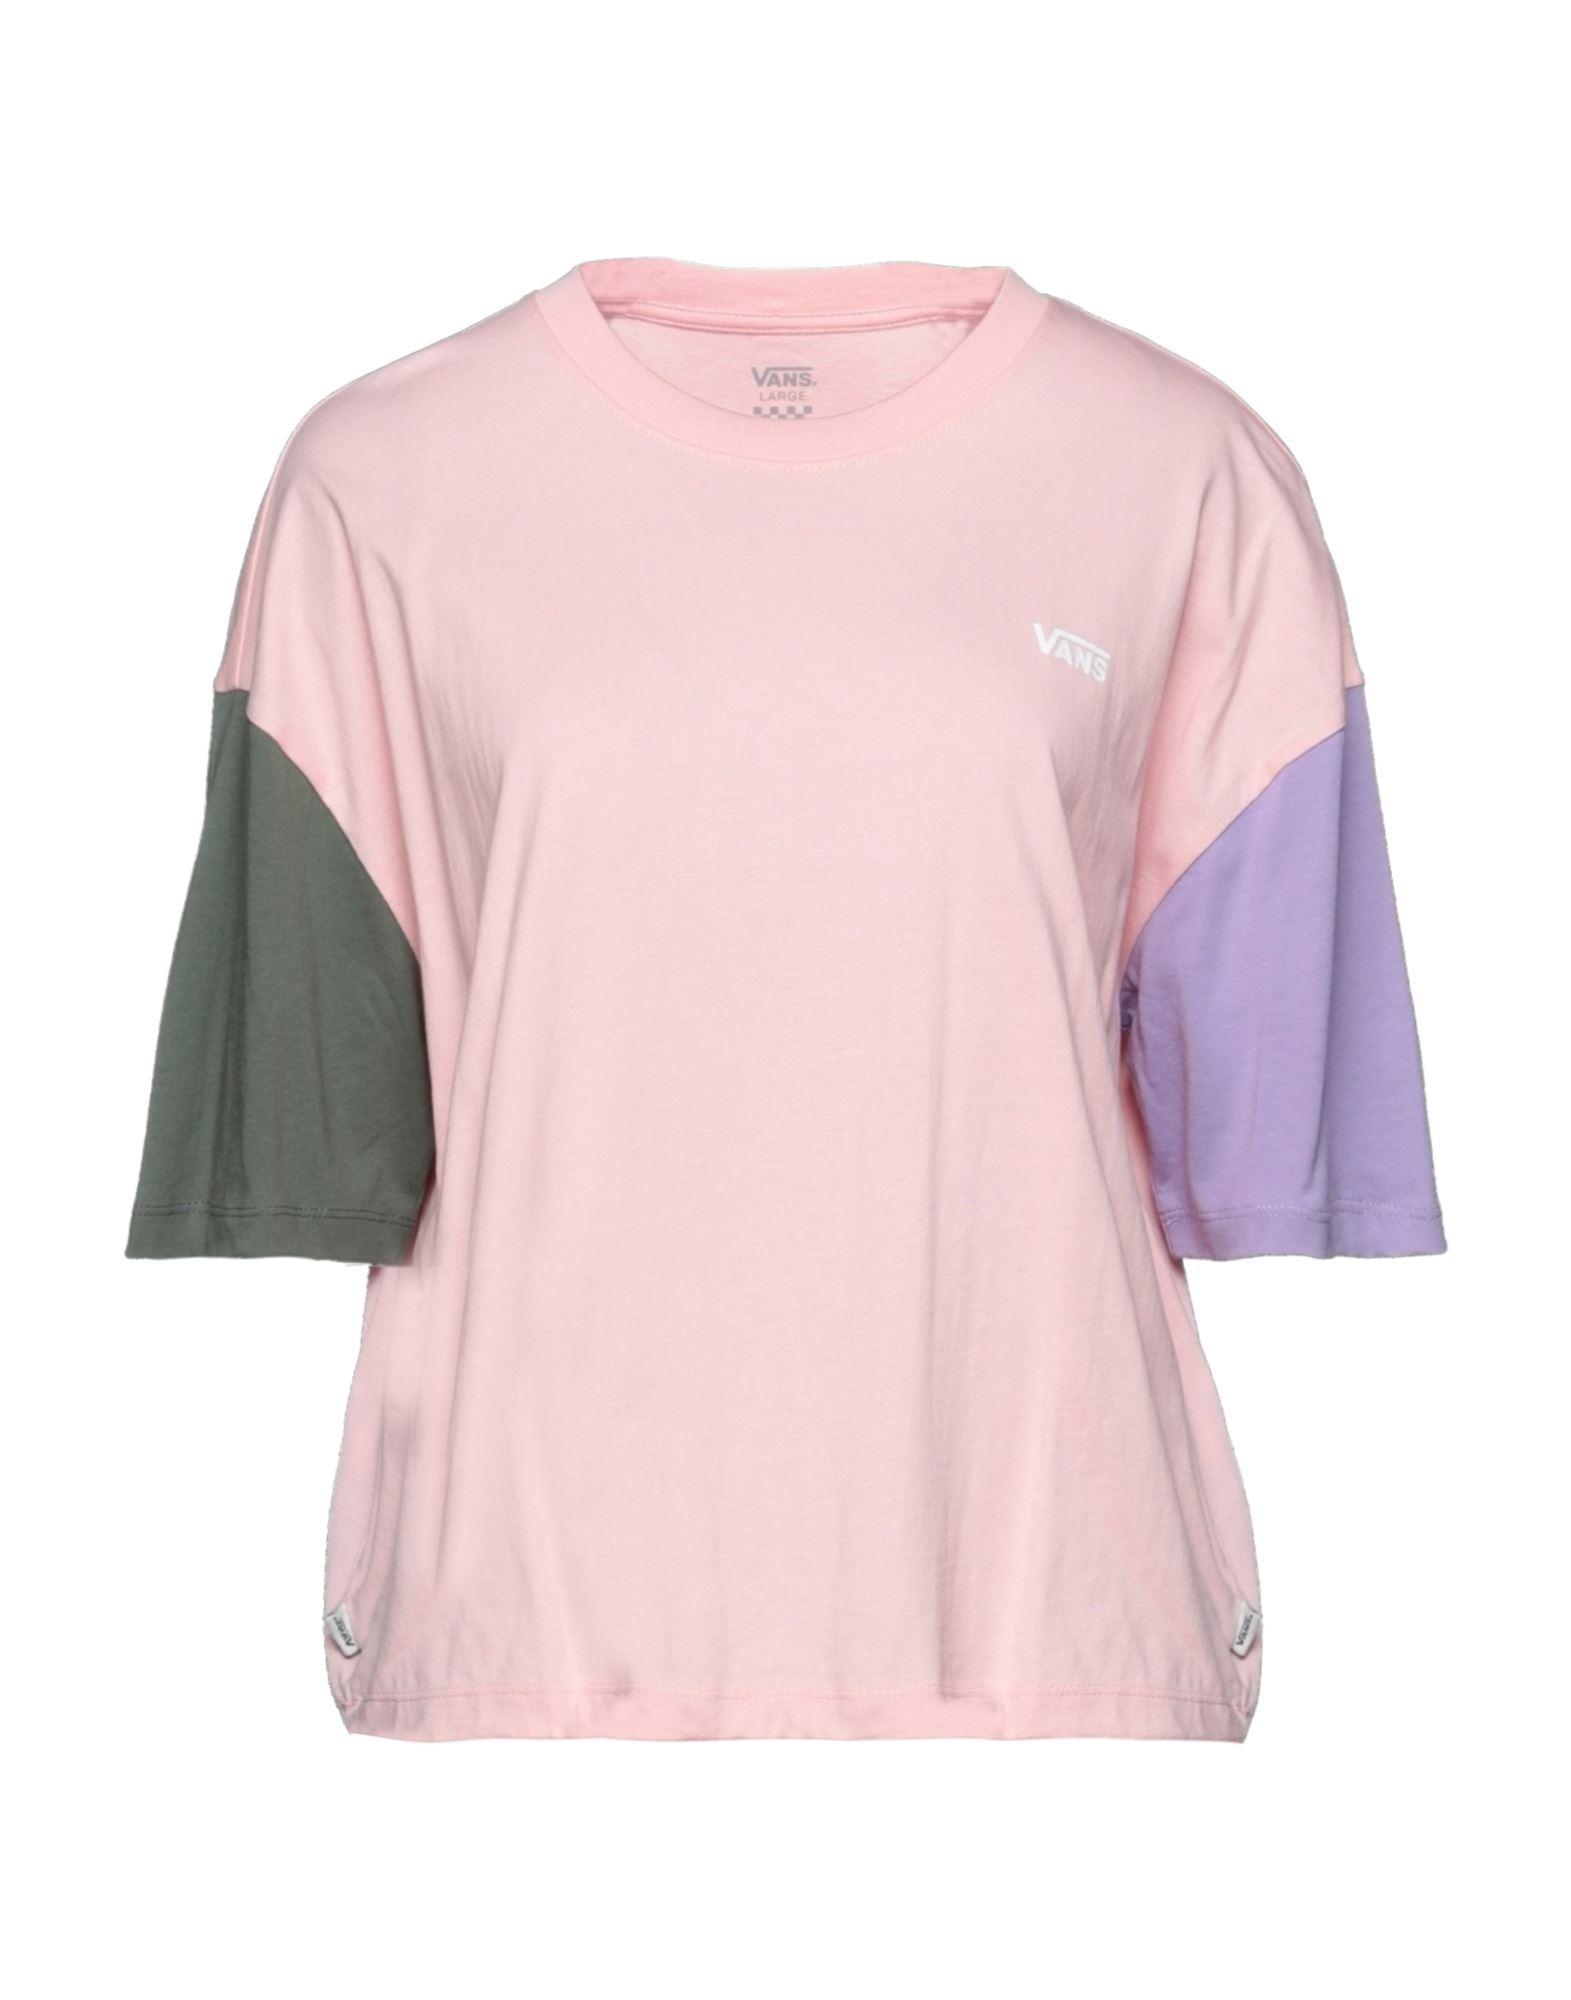 Vans Cotton T-shirt in Pink - Lyst